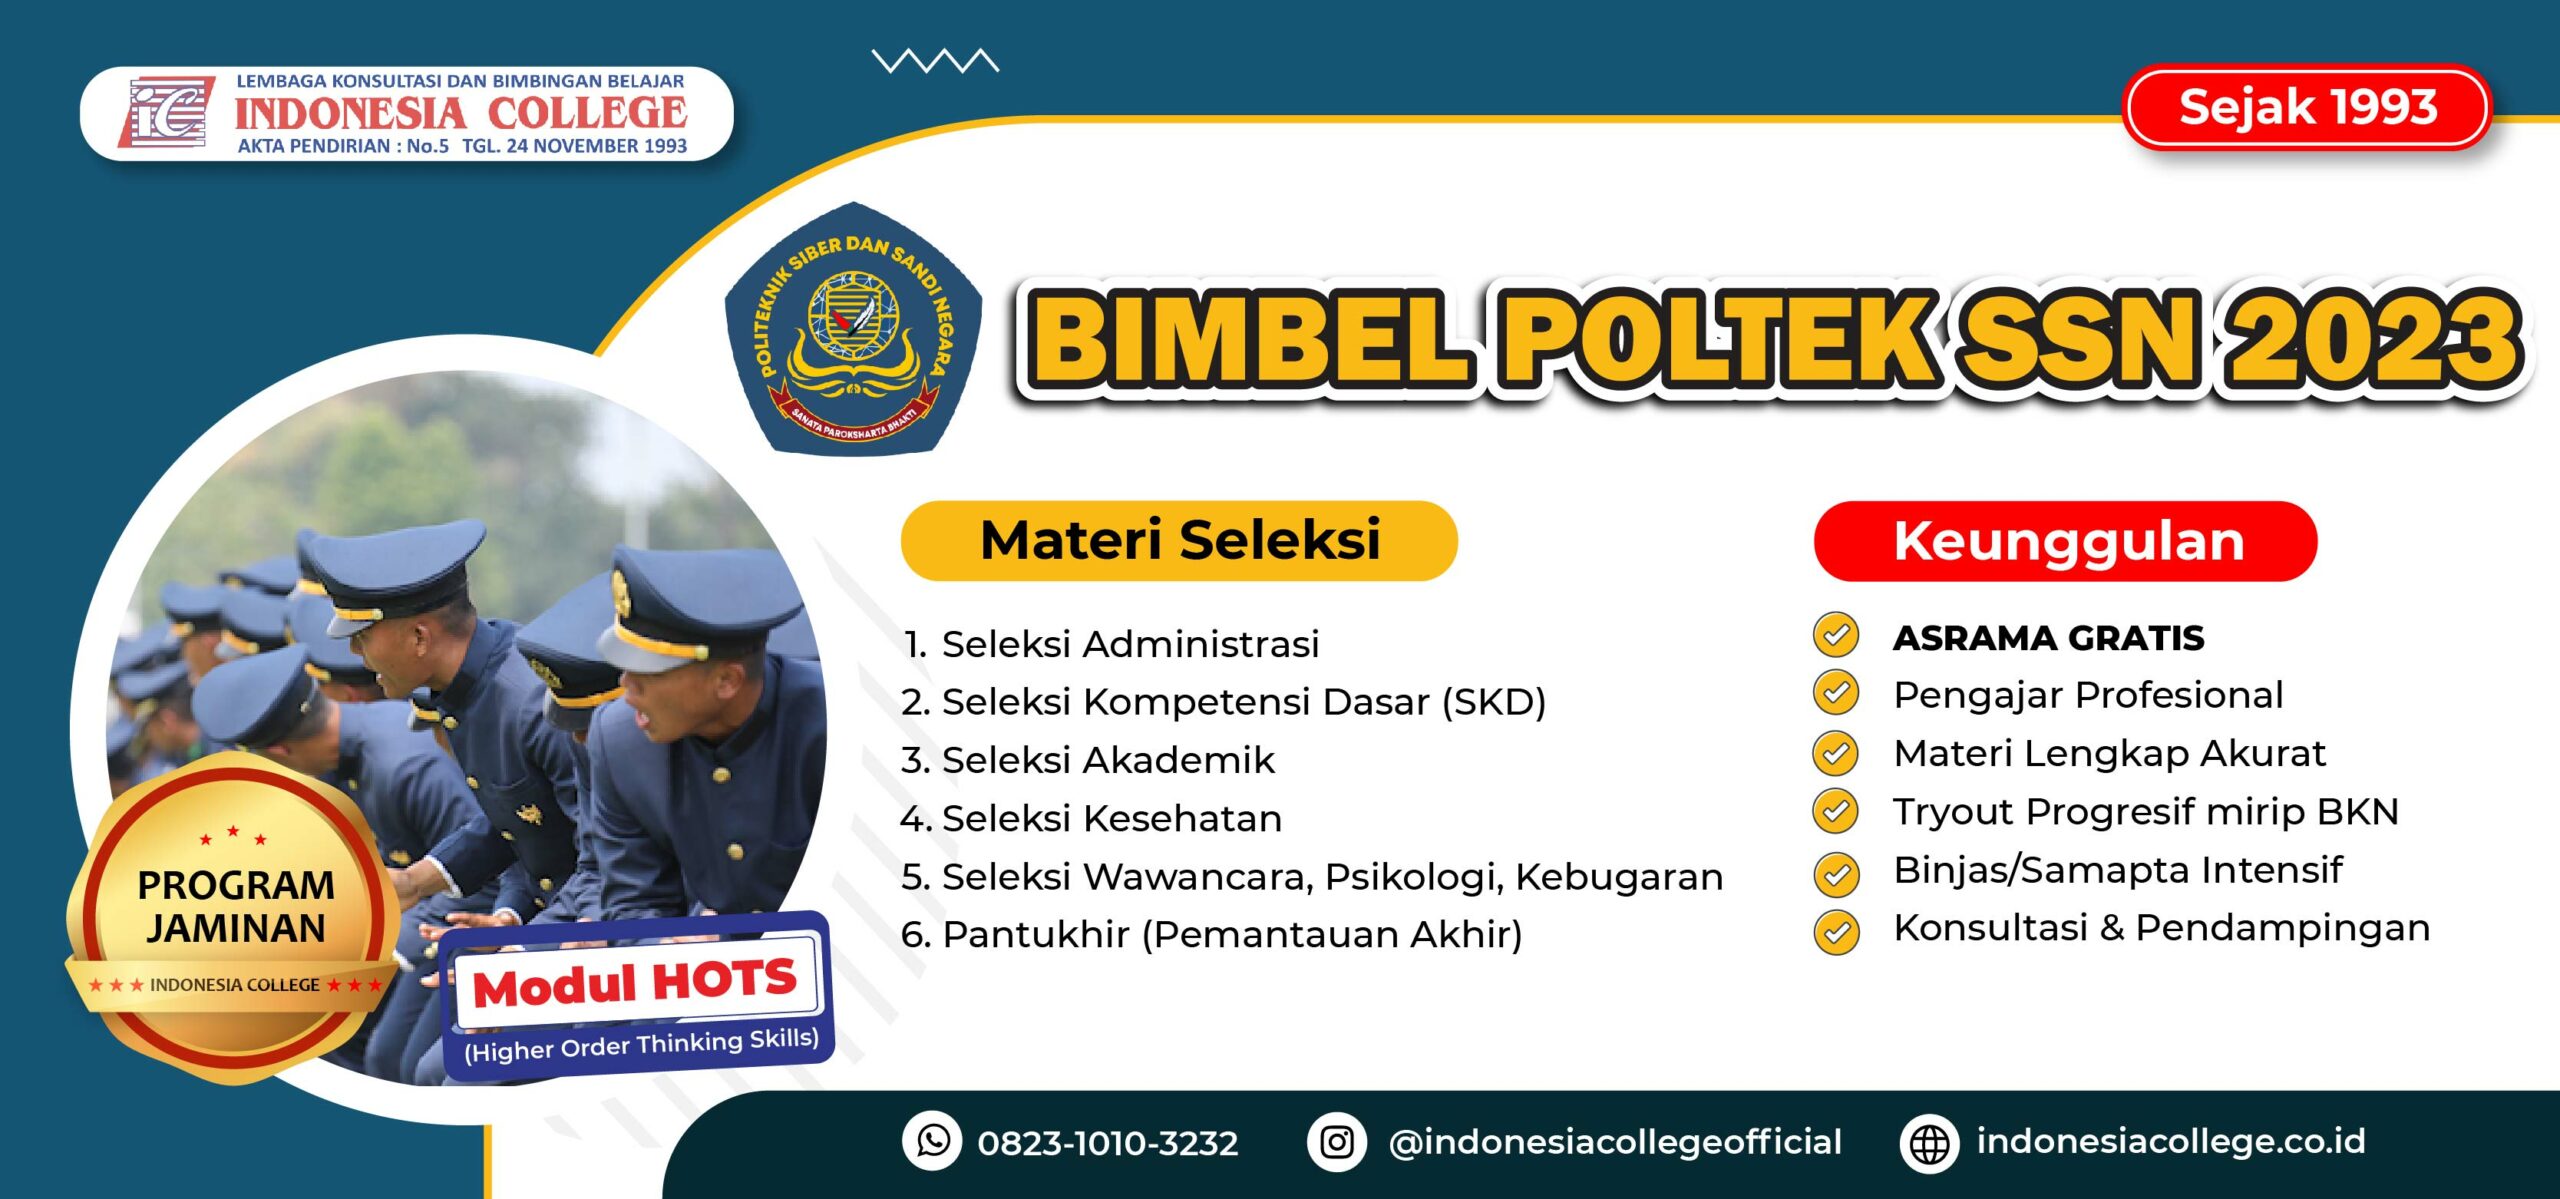 Bimbel POLTEK SSN 2023 - Indonesia College